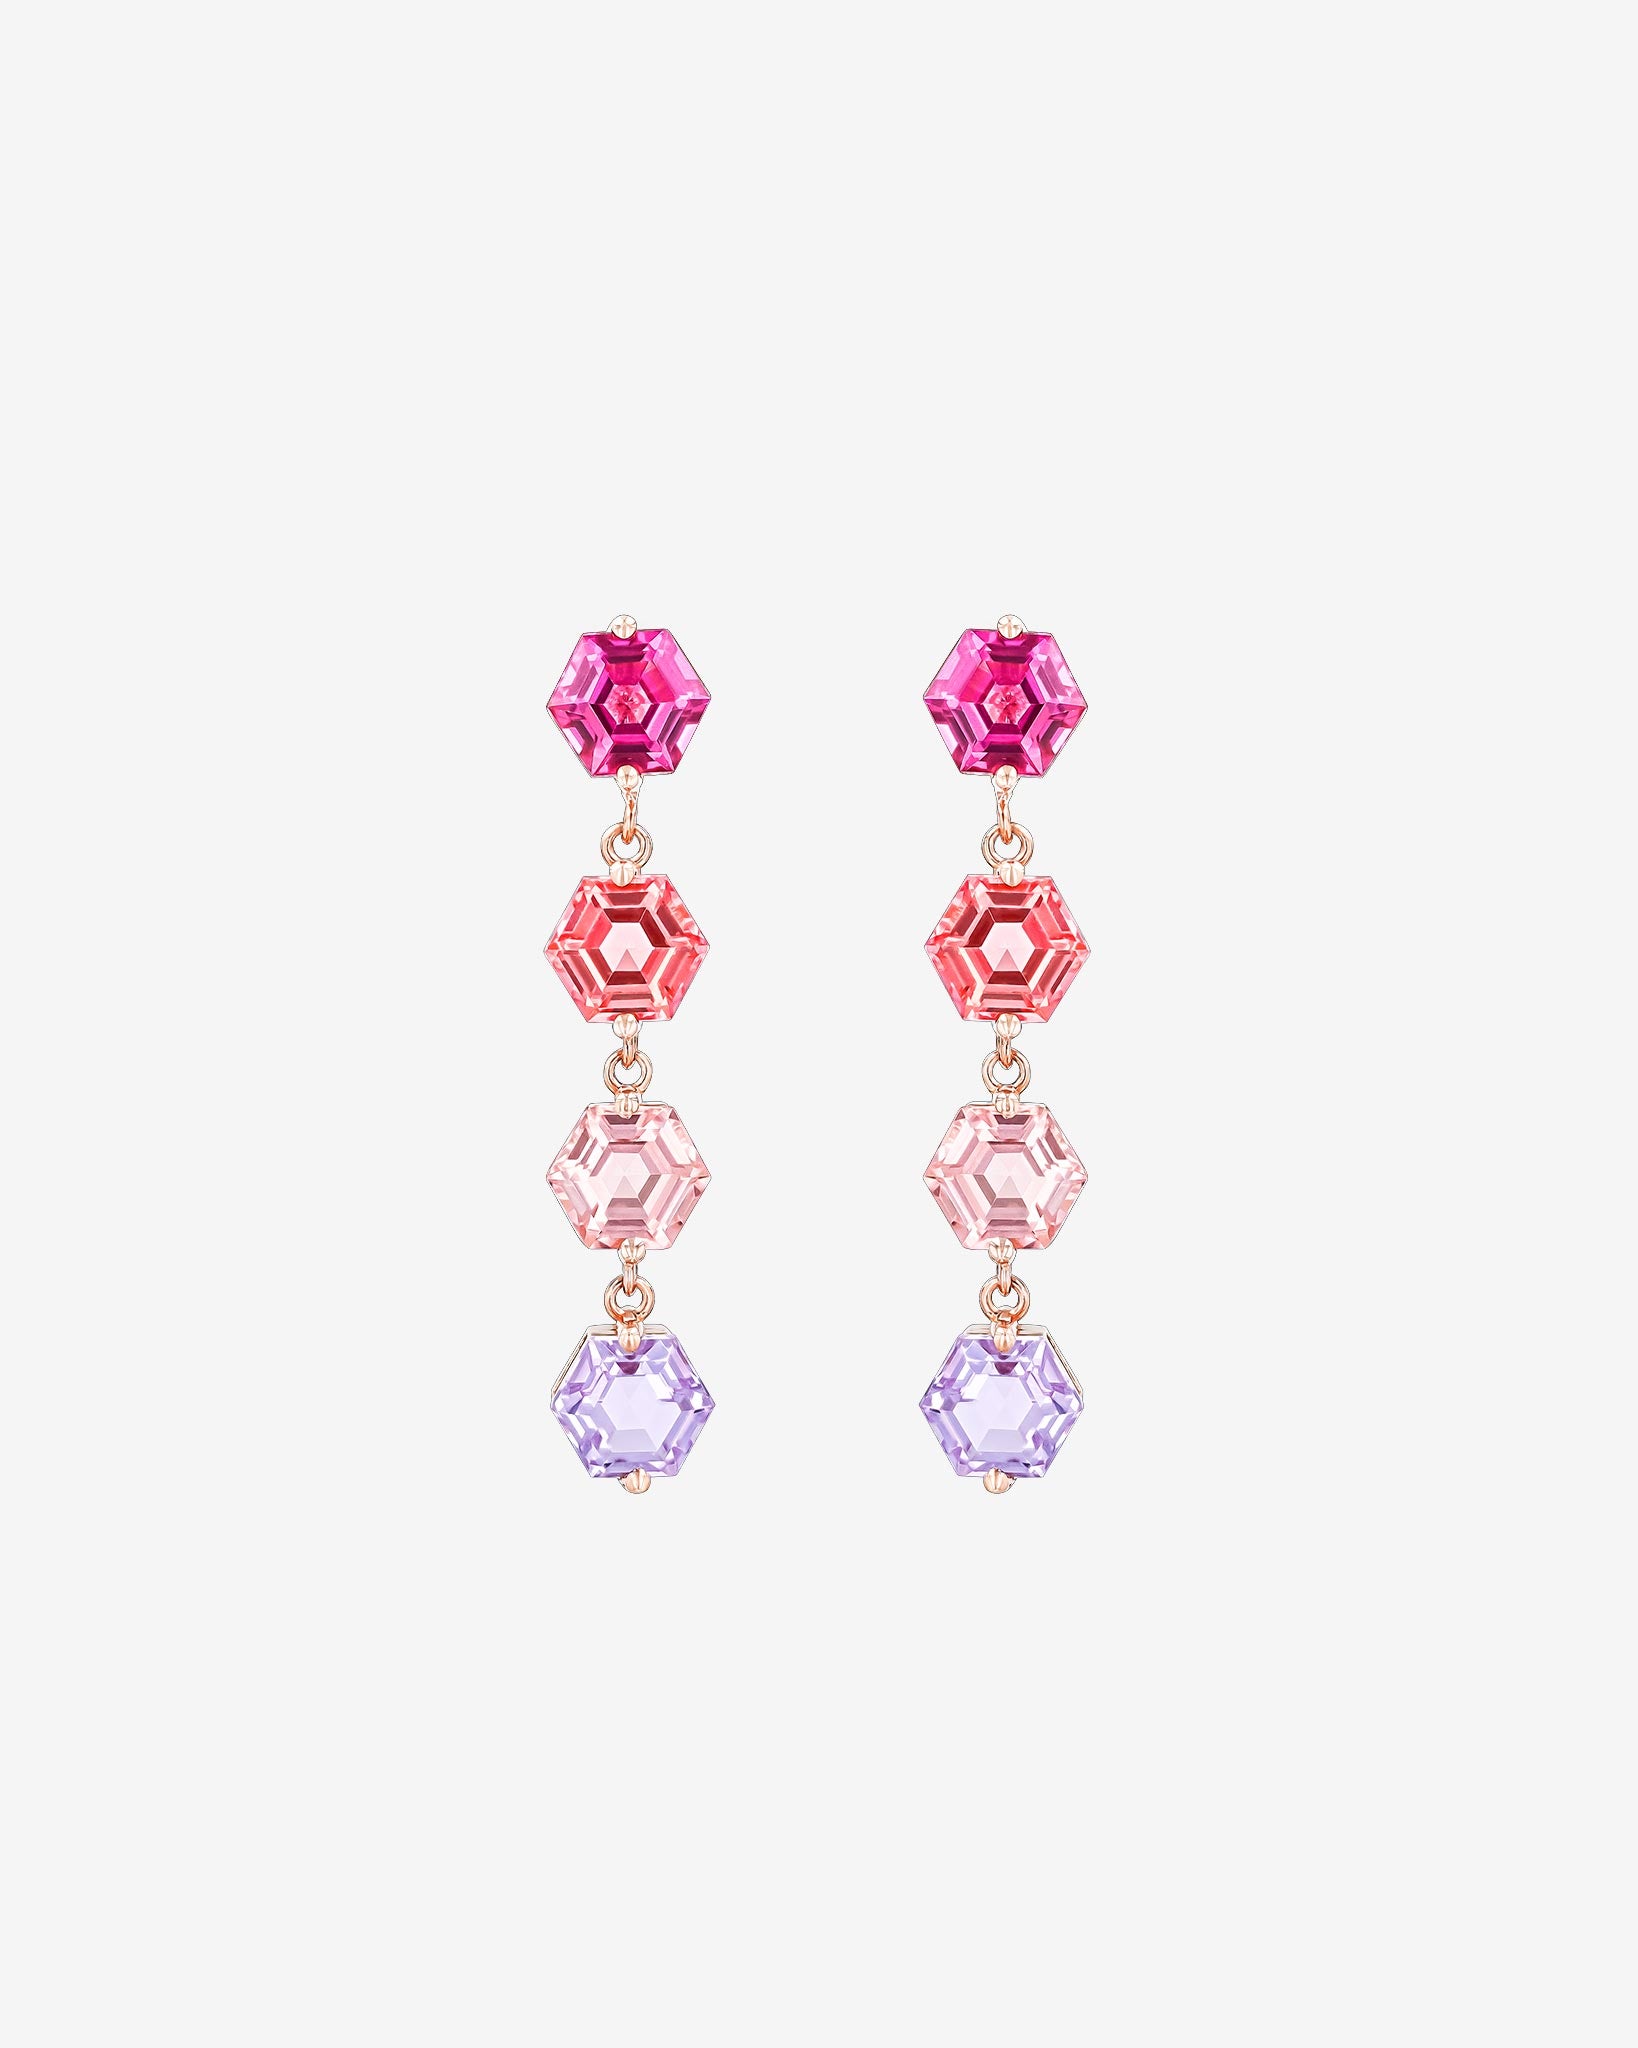 Kalan By Suzanne Kalan Amalfi Hexagon Cut Pink Ombre Mini Drop Earrings in 14k rose gold